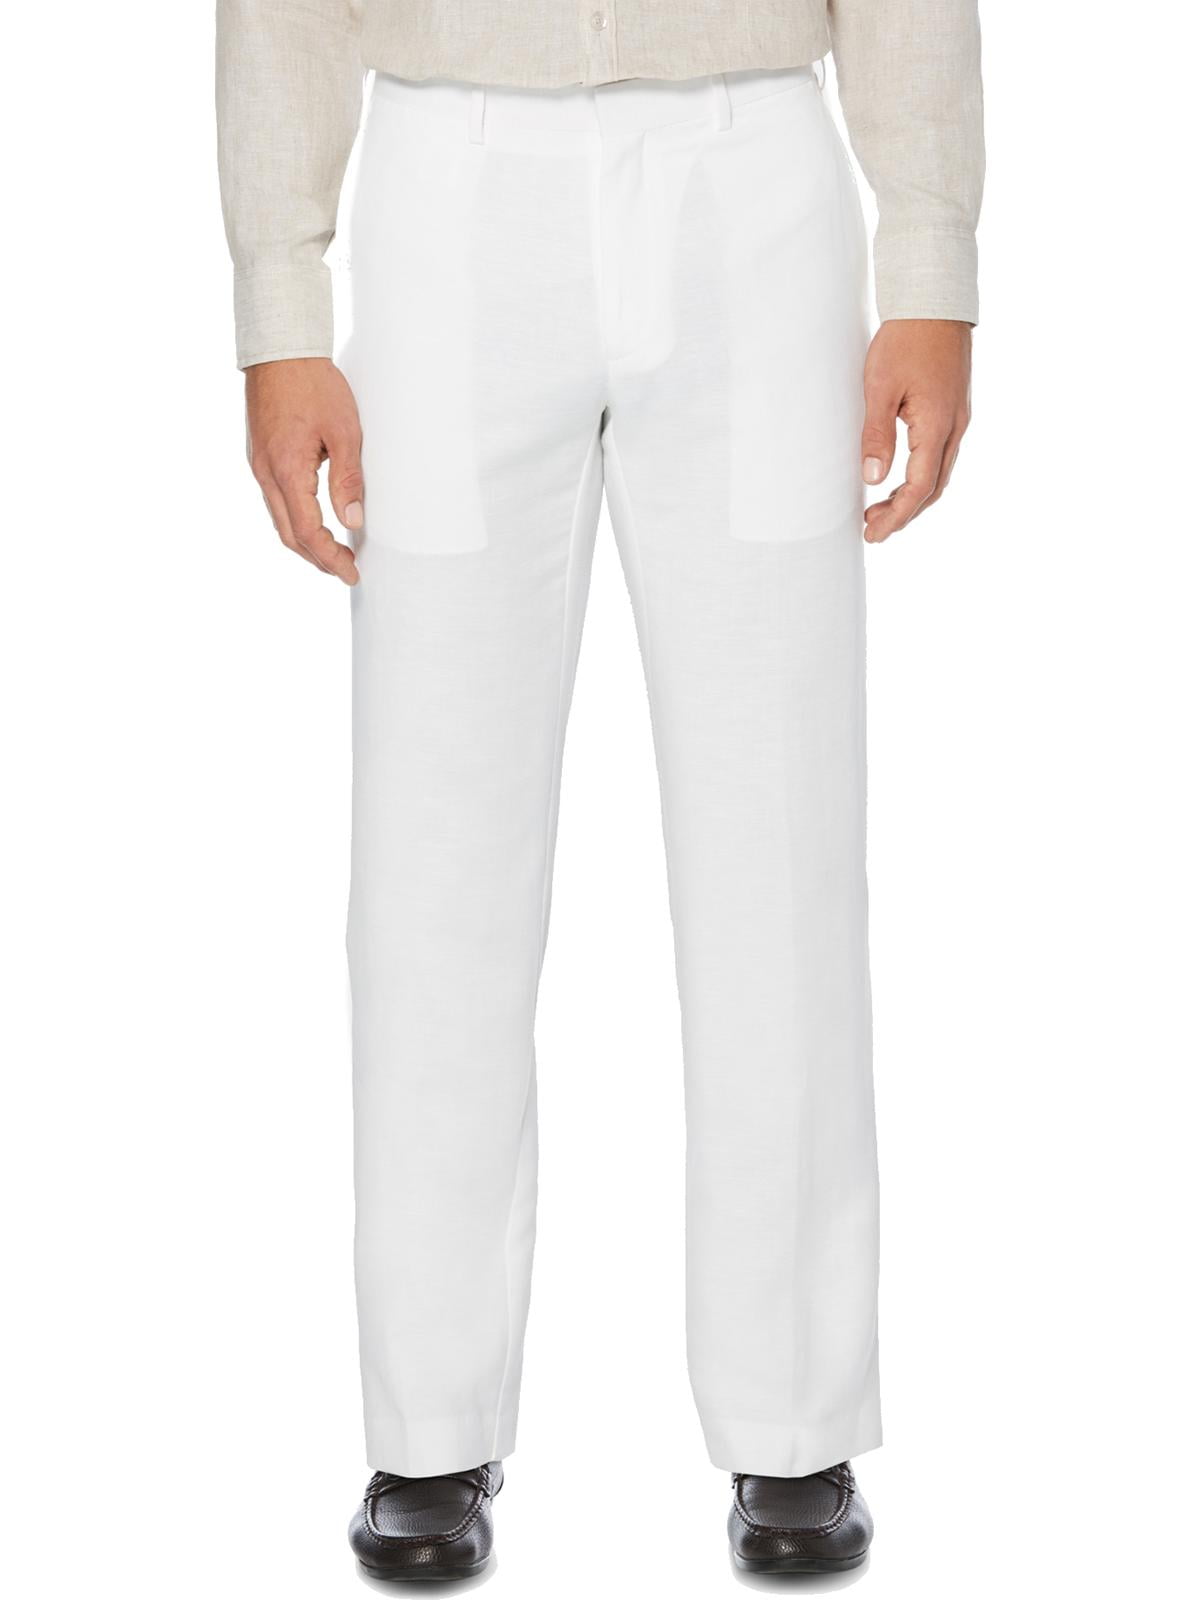 Cubavera Mens Linen Blnd Solid Dress Pants White 54/32 - Walmart.com